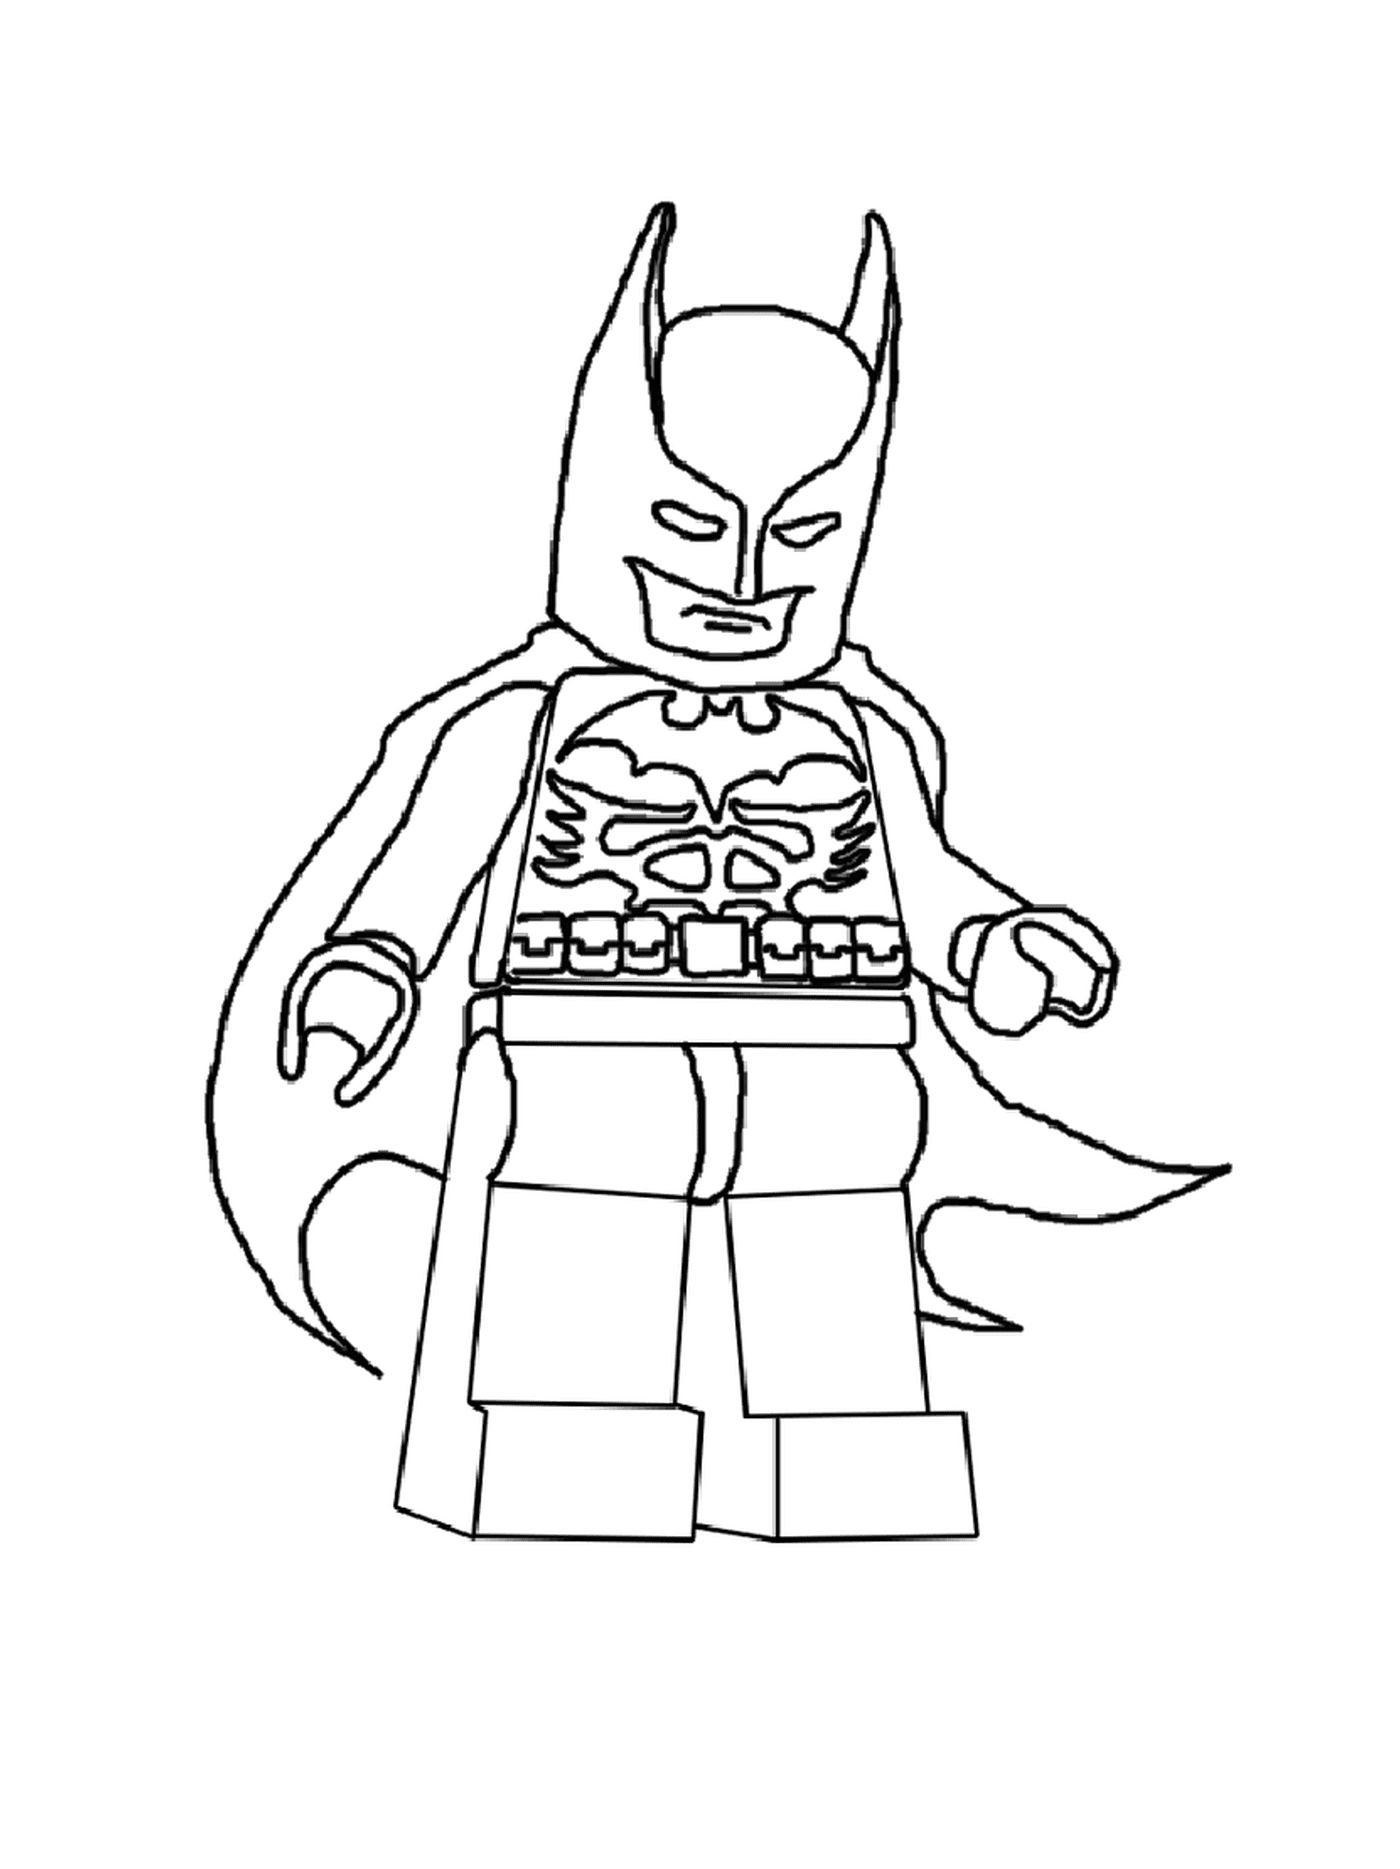  Batman Lego of the 2017 film 